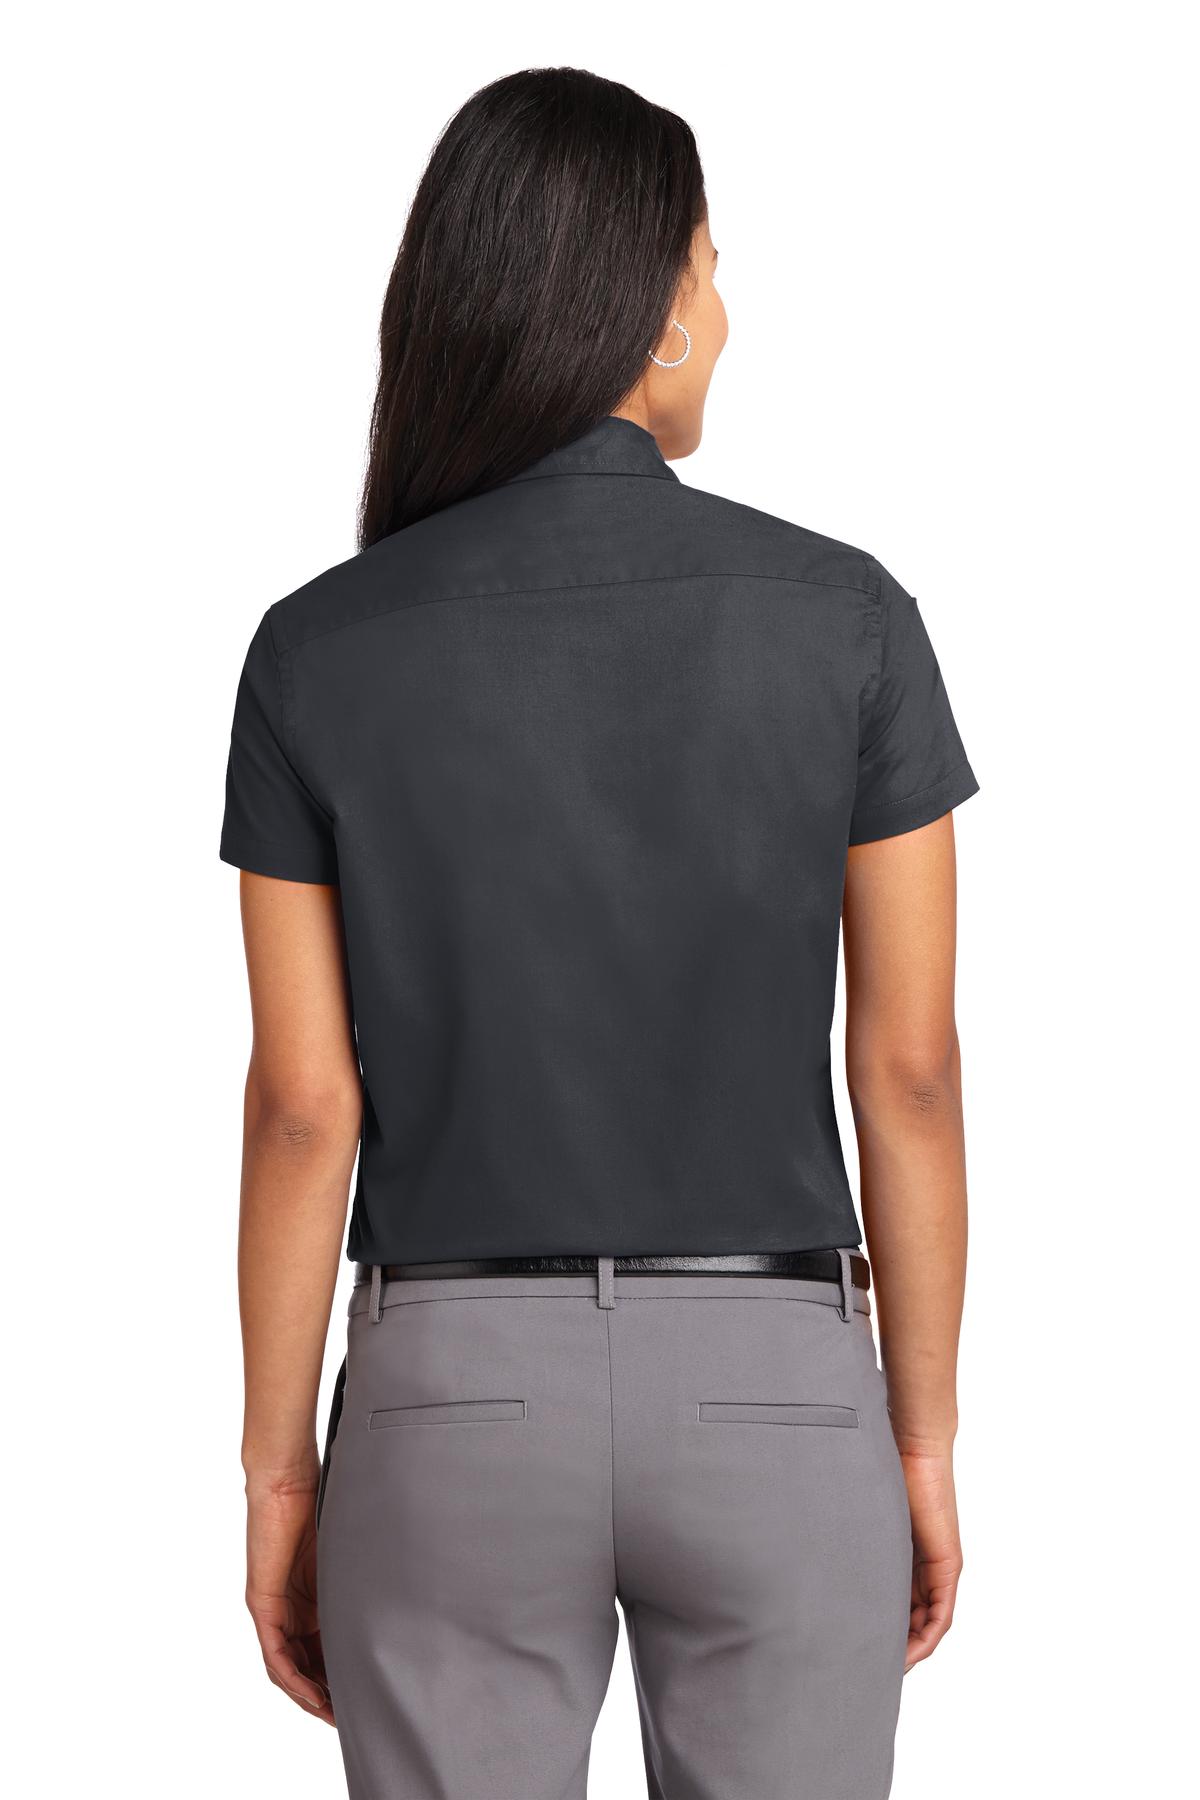 Port Authority® Ladies Short Sleeve Easy Care Shirt. L508 [Classic Navy/ Light Stone] - DFW Impression